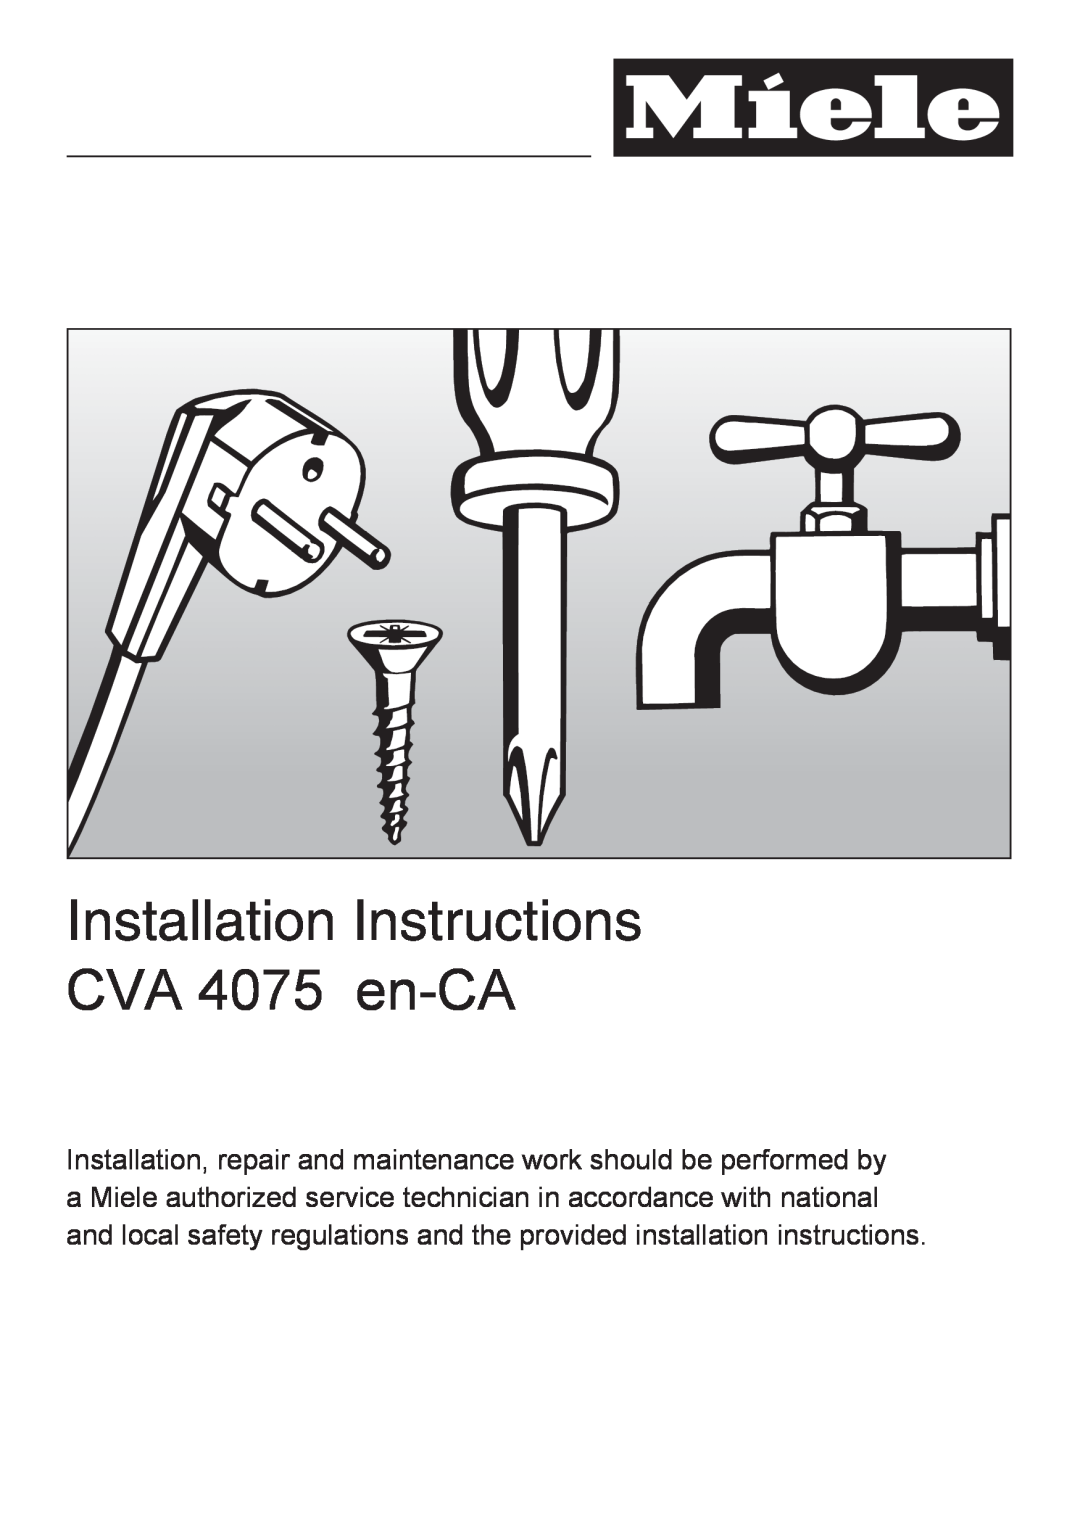 Miele CVA 4075 EN-CA installation instructions Installation Instructions CVA 4075 en-CA 